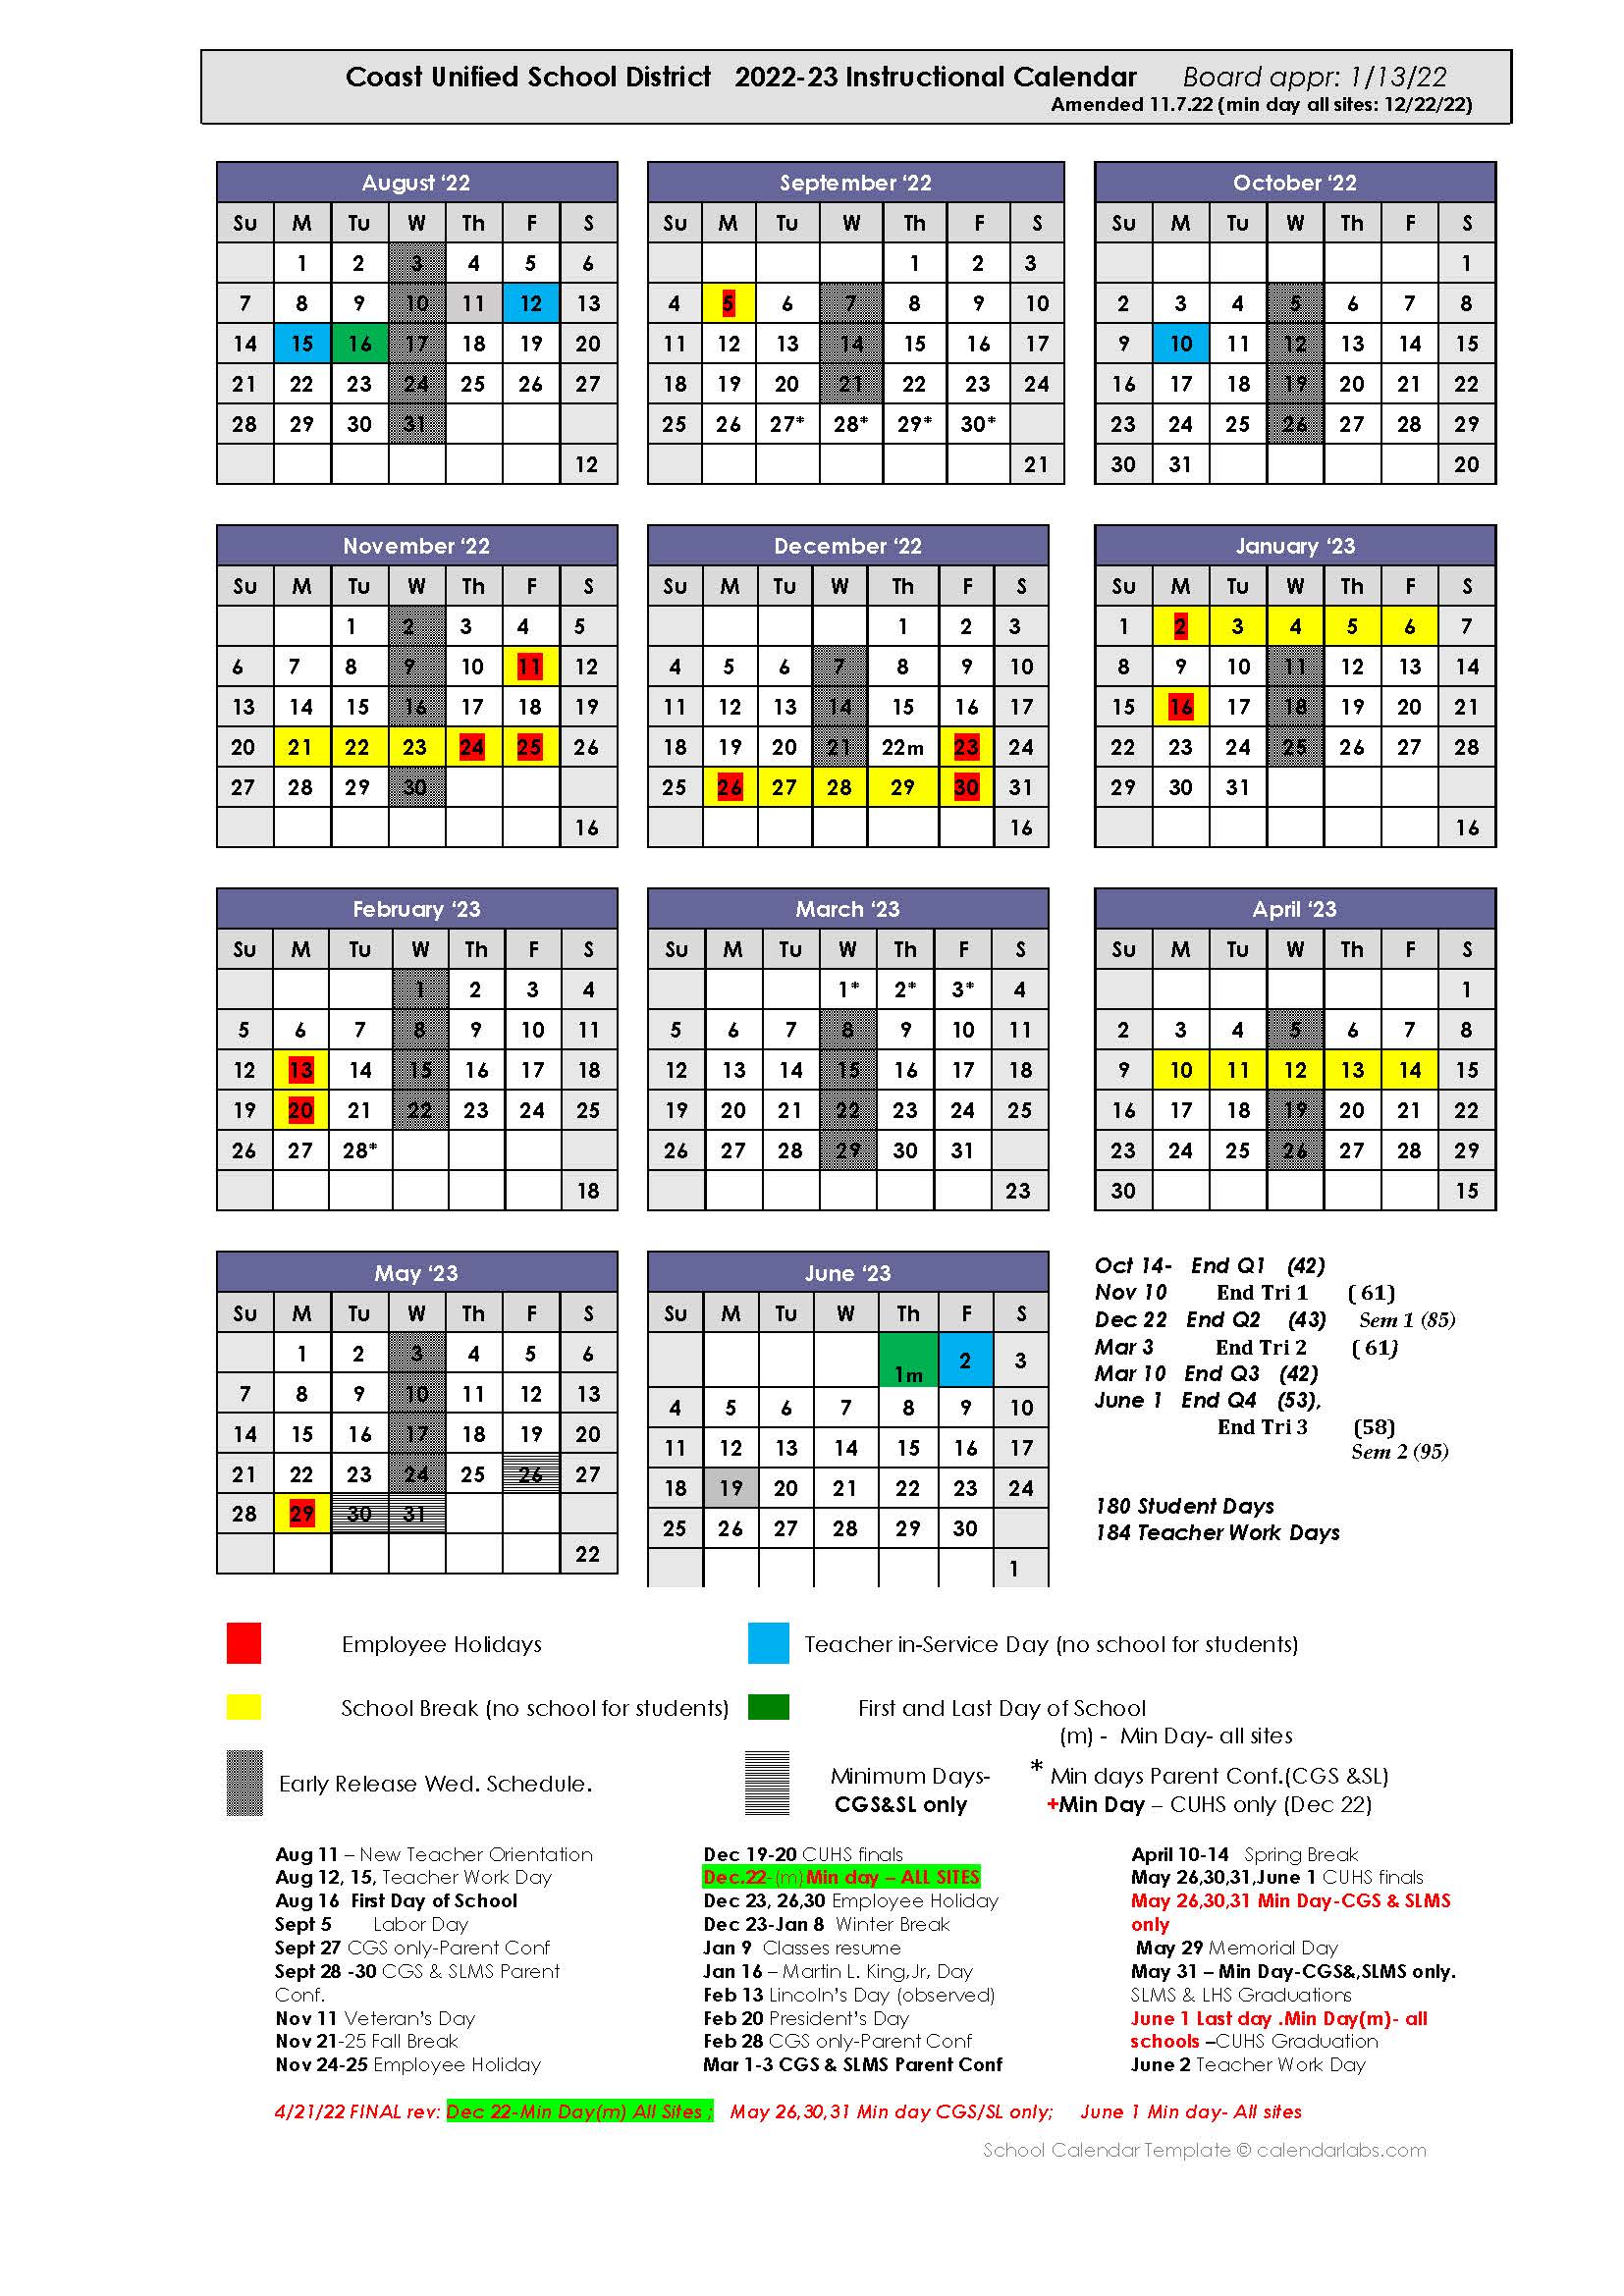 Coast Unified School District Calendar 2024 2025 MyCOLLEGEPOINTS